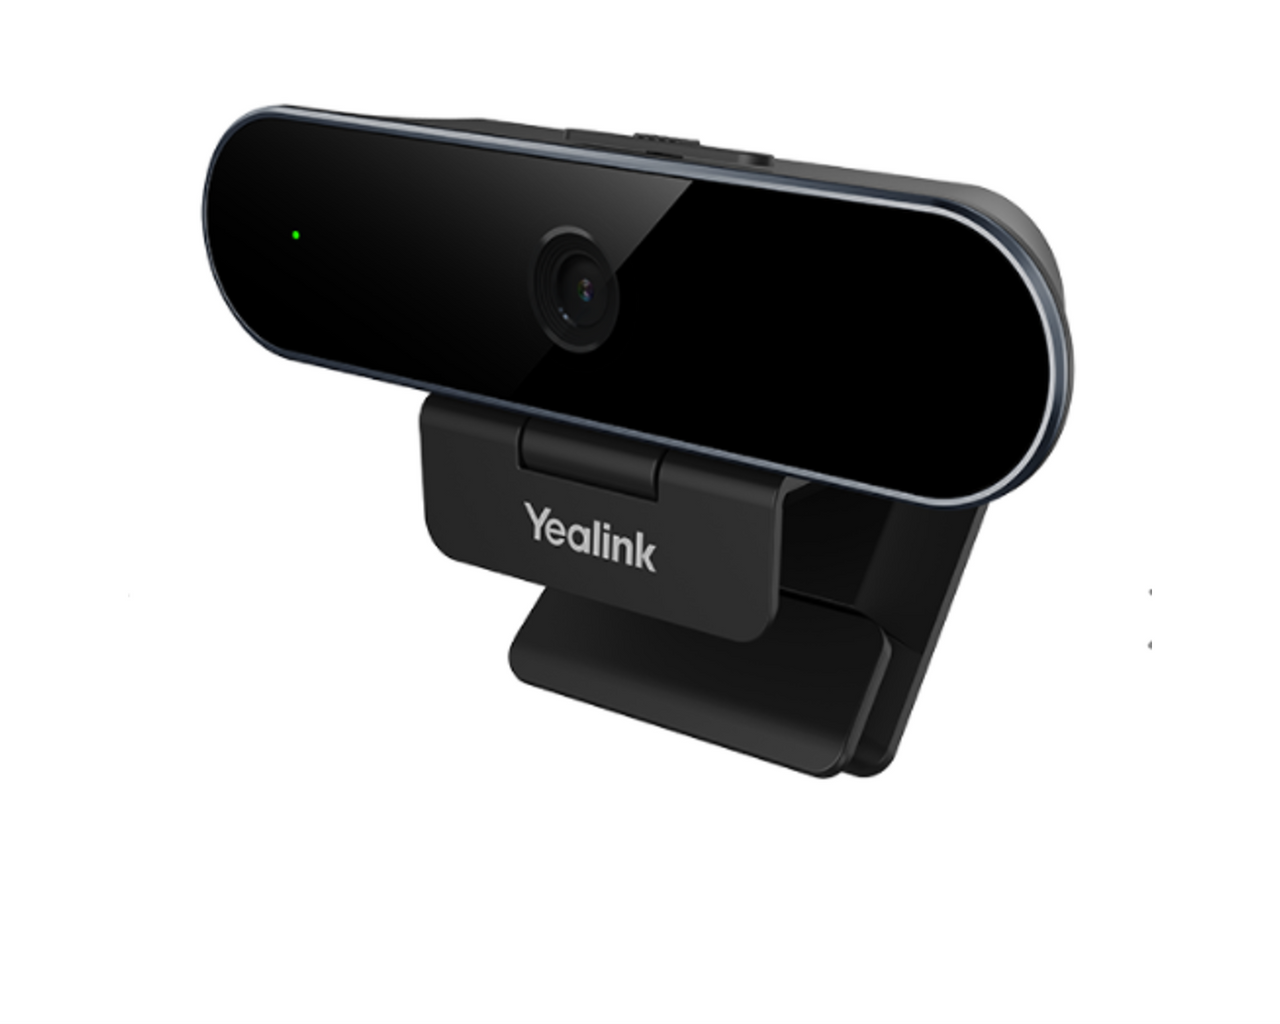 Yealink-UVC20-FHD-USB-Webcam view a